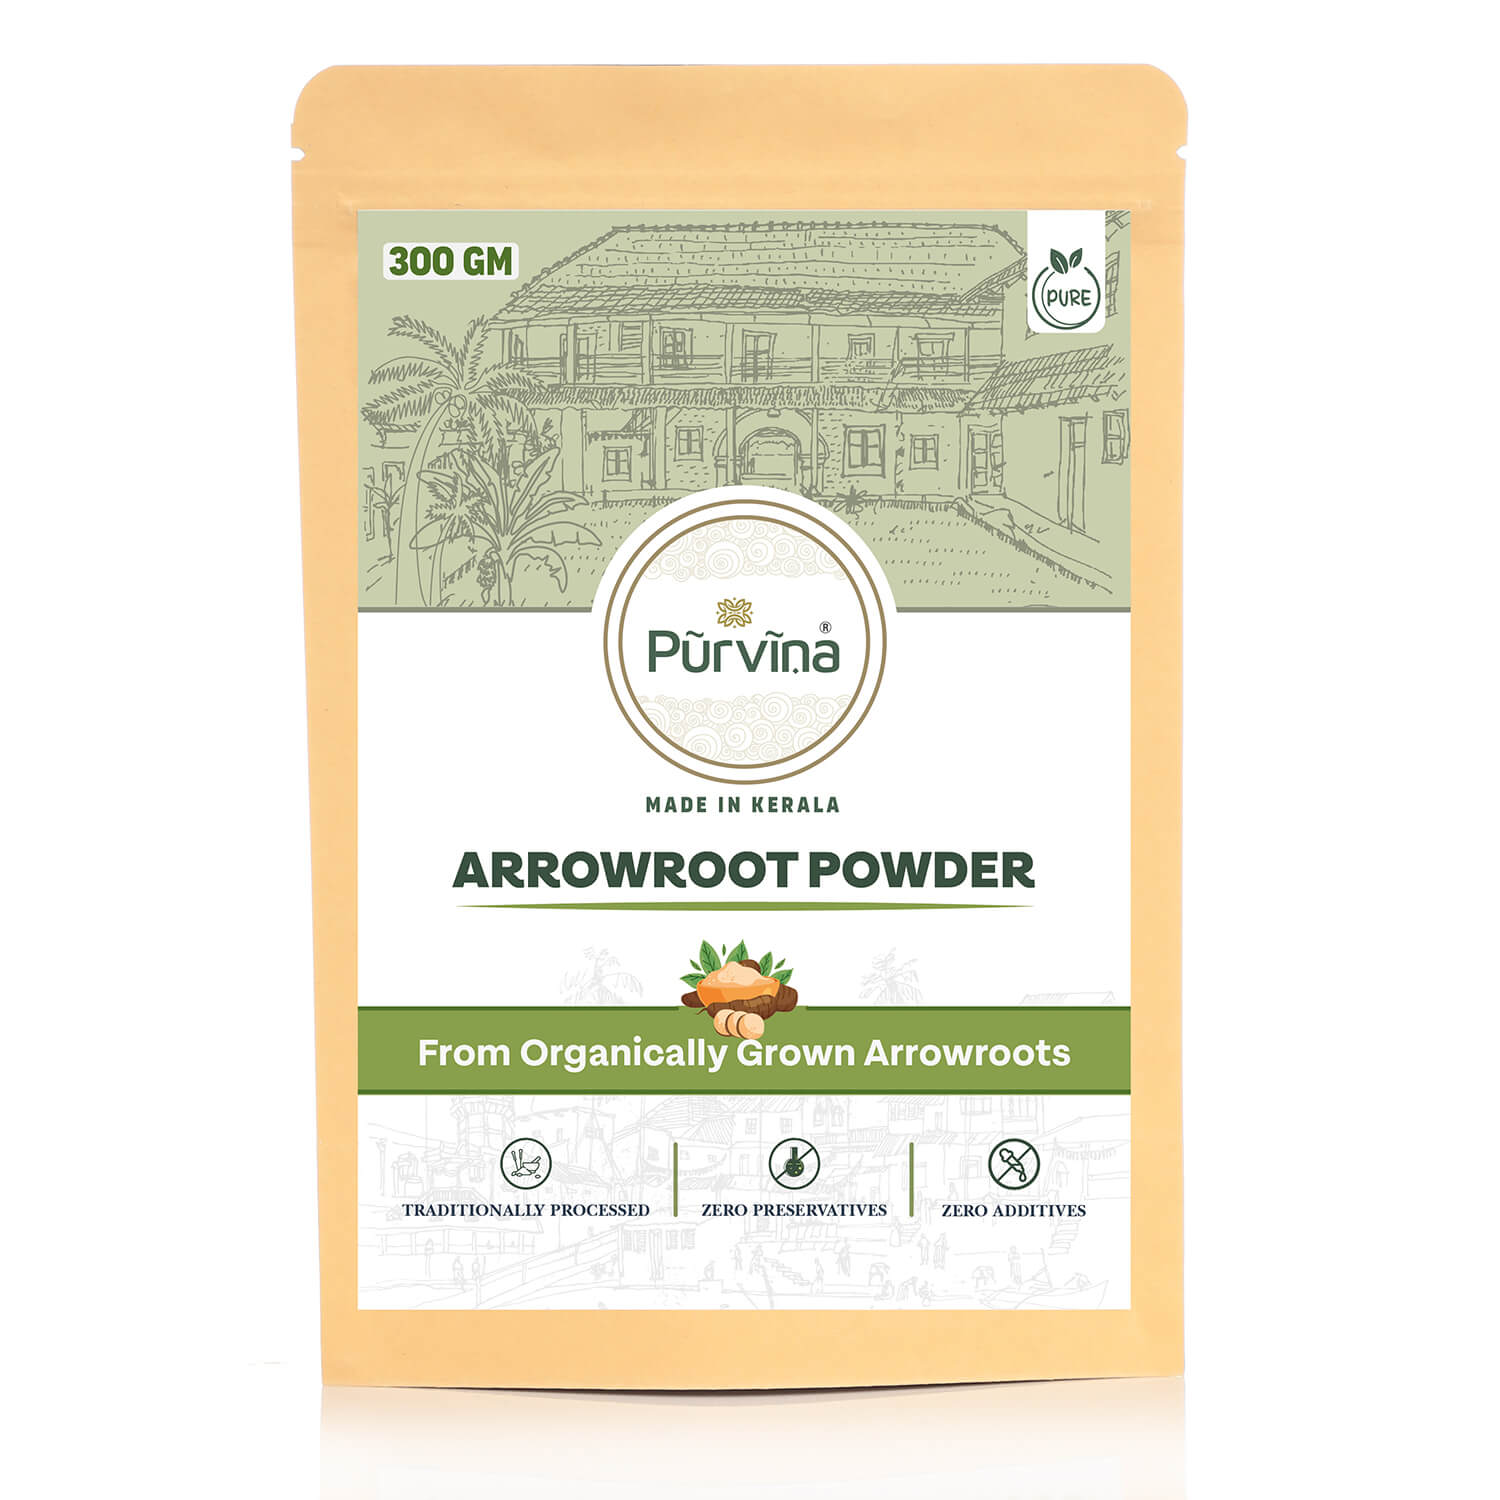 Pūrvīṇa Pure Arrowroot Powder (Koova podi) from Organically Grown Arrowroots